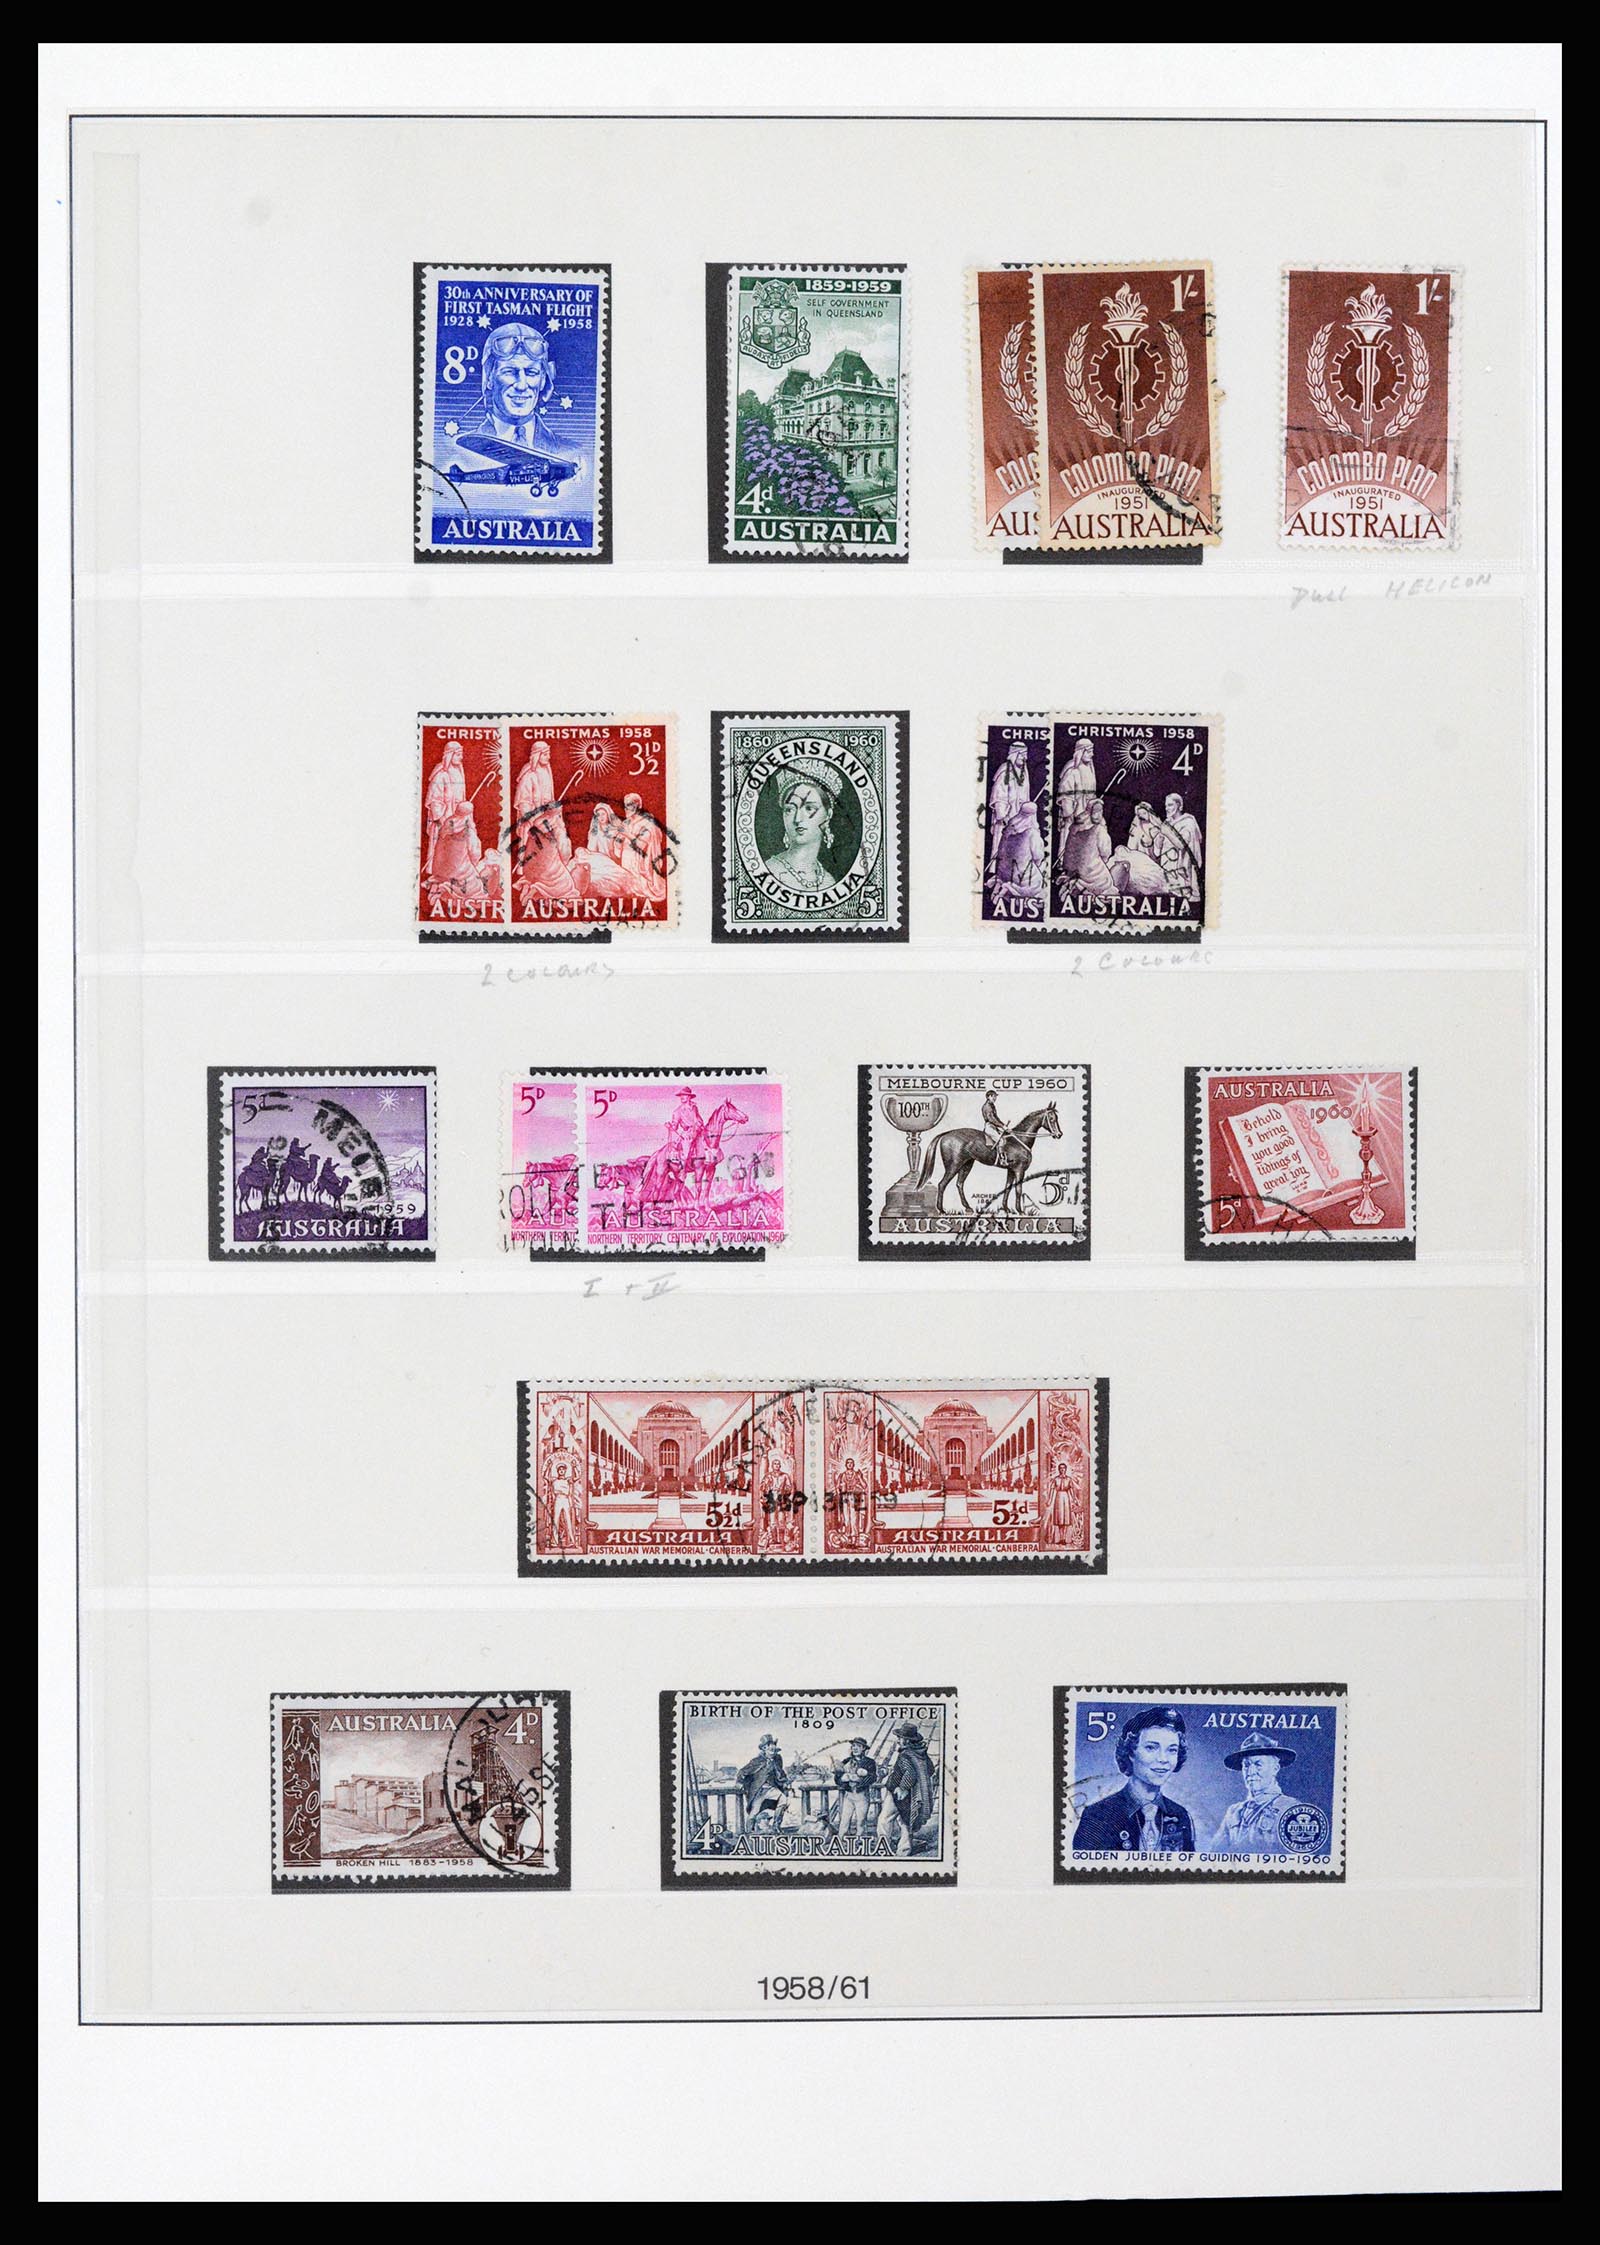 37259 007 - Stamp collection 37259 Australia 1951-2006.